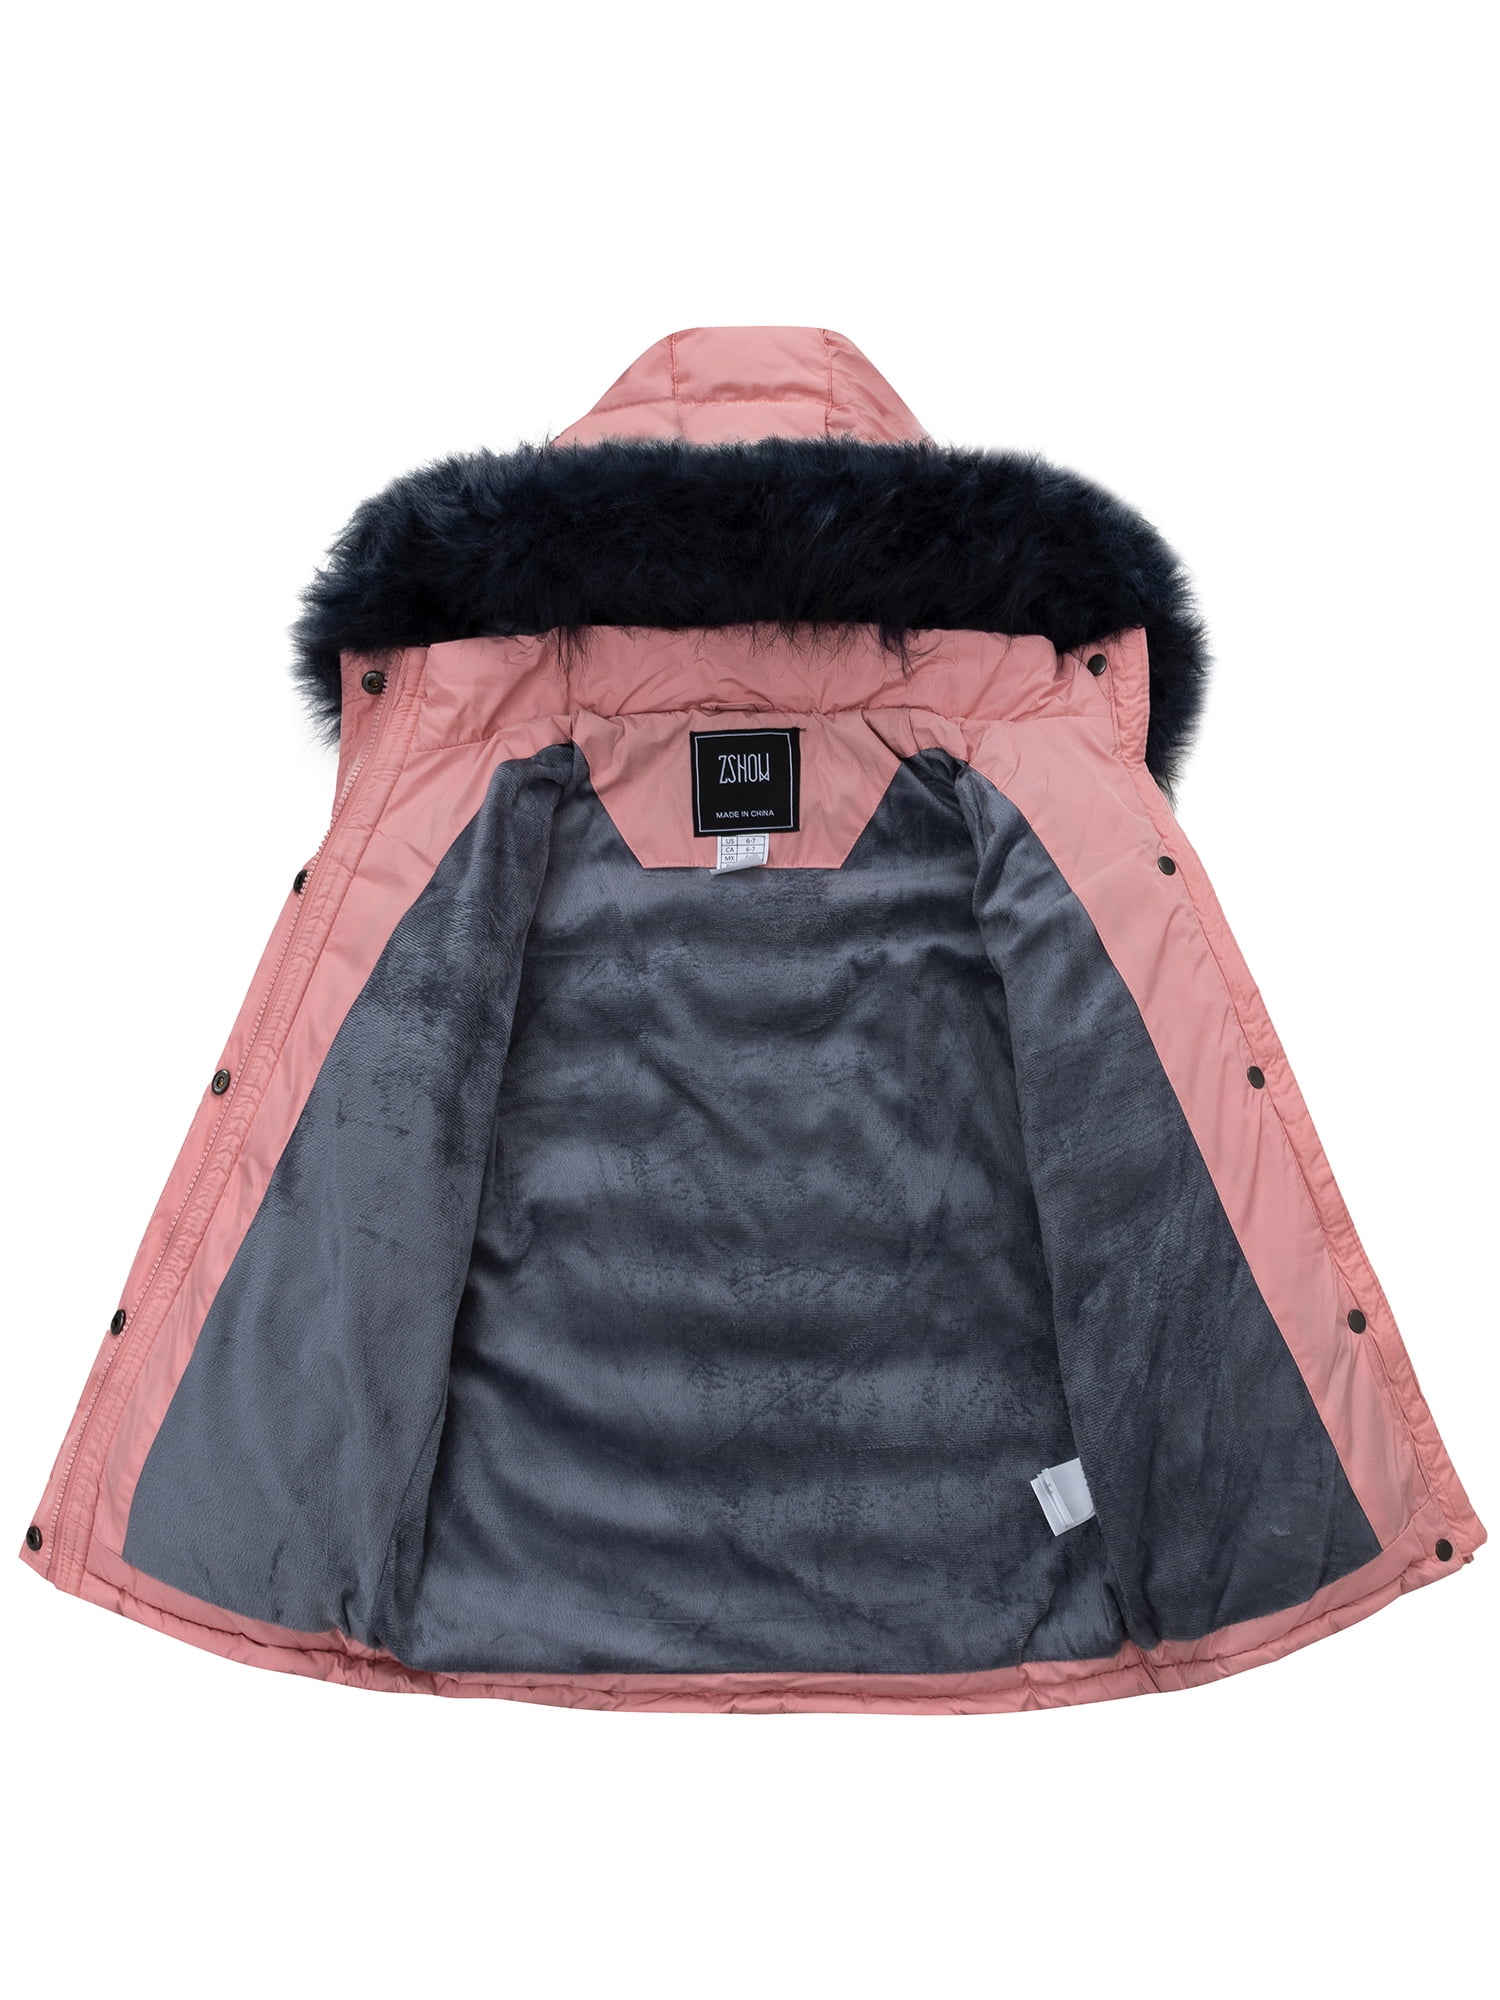 ZSHOW Girls' Puffer Jacket Waterptproof Puffy Coat Windproof Padded Winter  Jacket Coral Pink 14/16